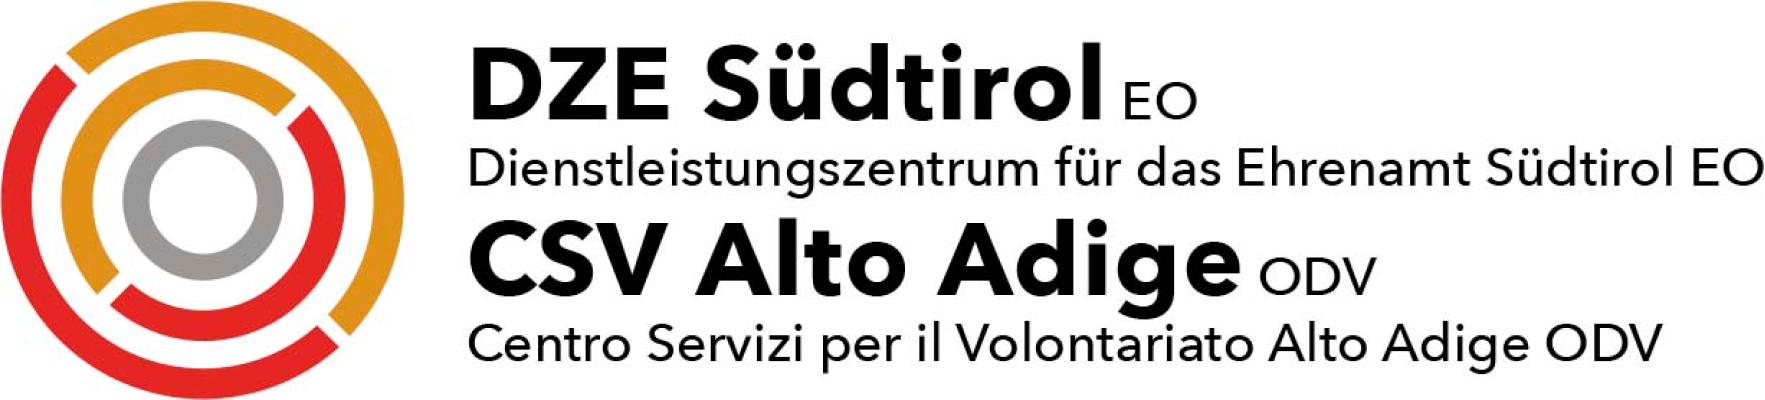 DZE Südtirol EO - CSV Alto Adige ODV